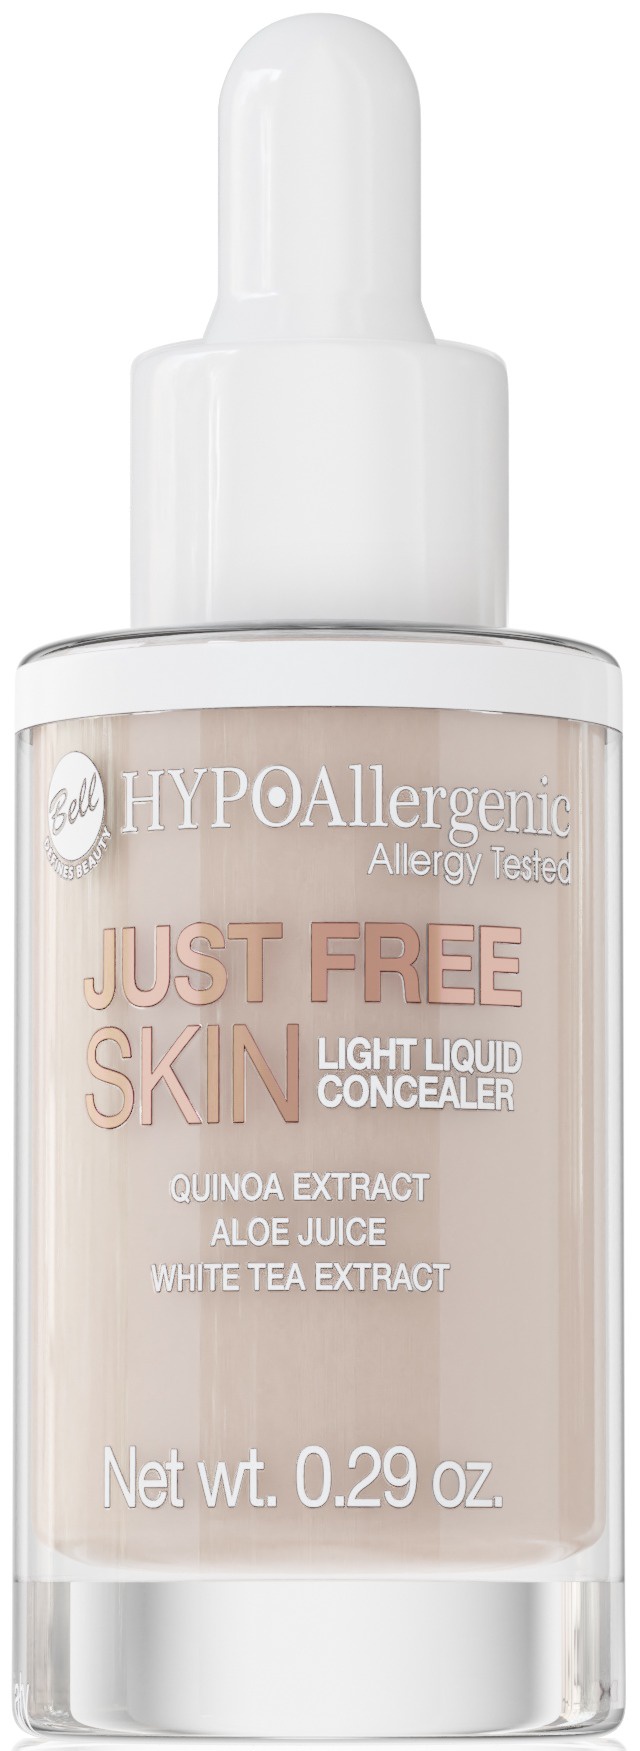 Bell HYPOAllergenic Just Free Skin Light Liquid Concealer